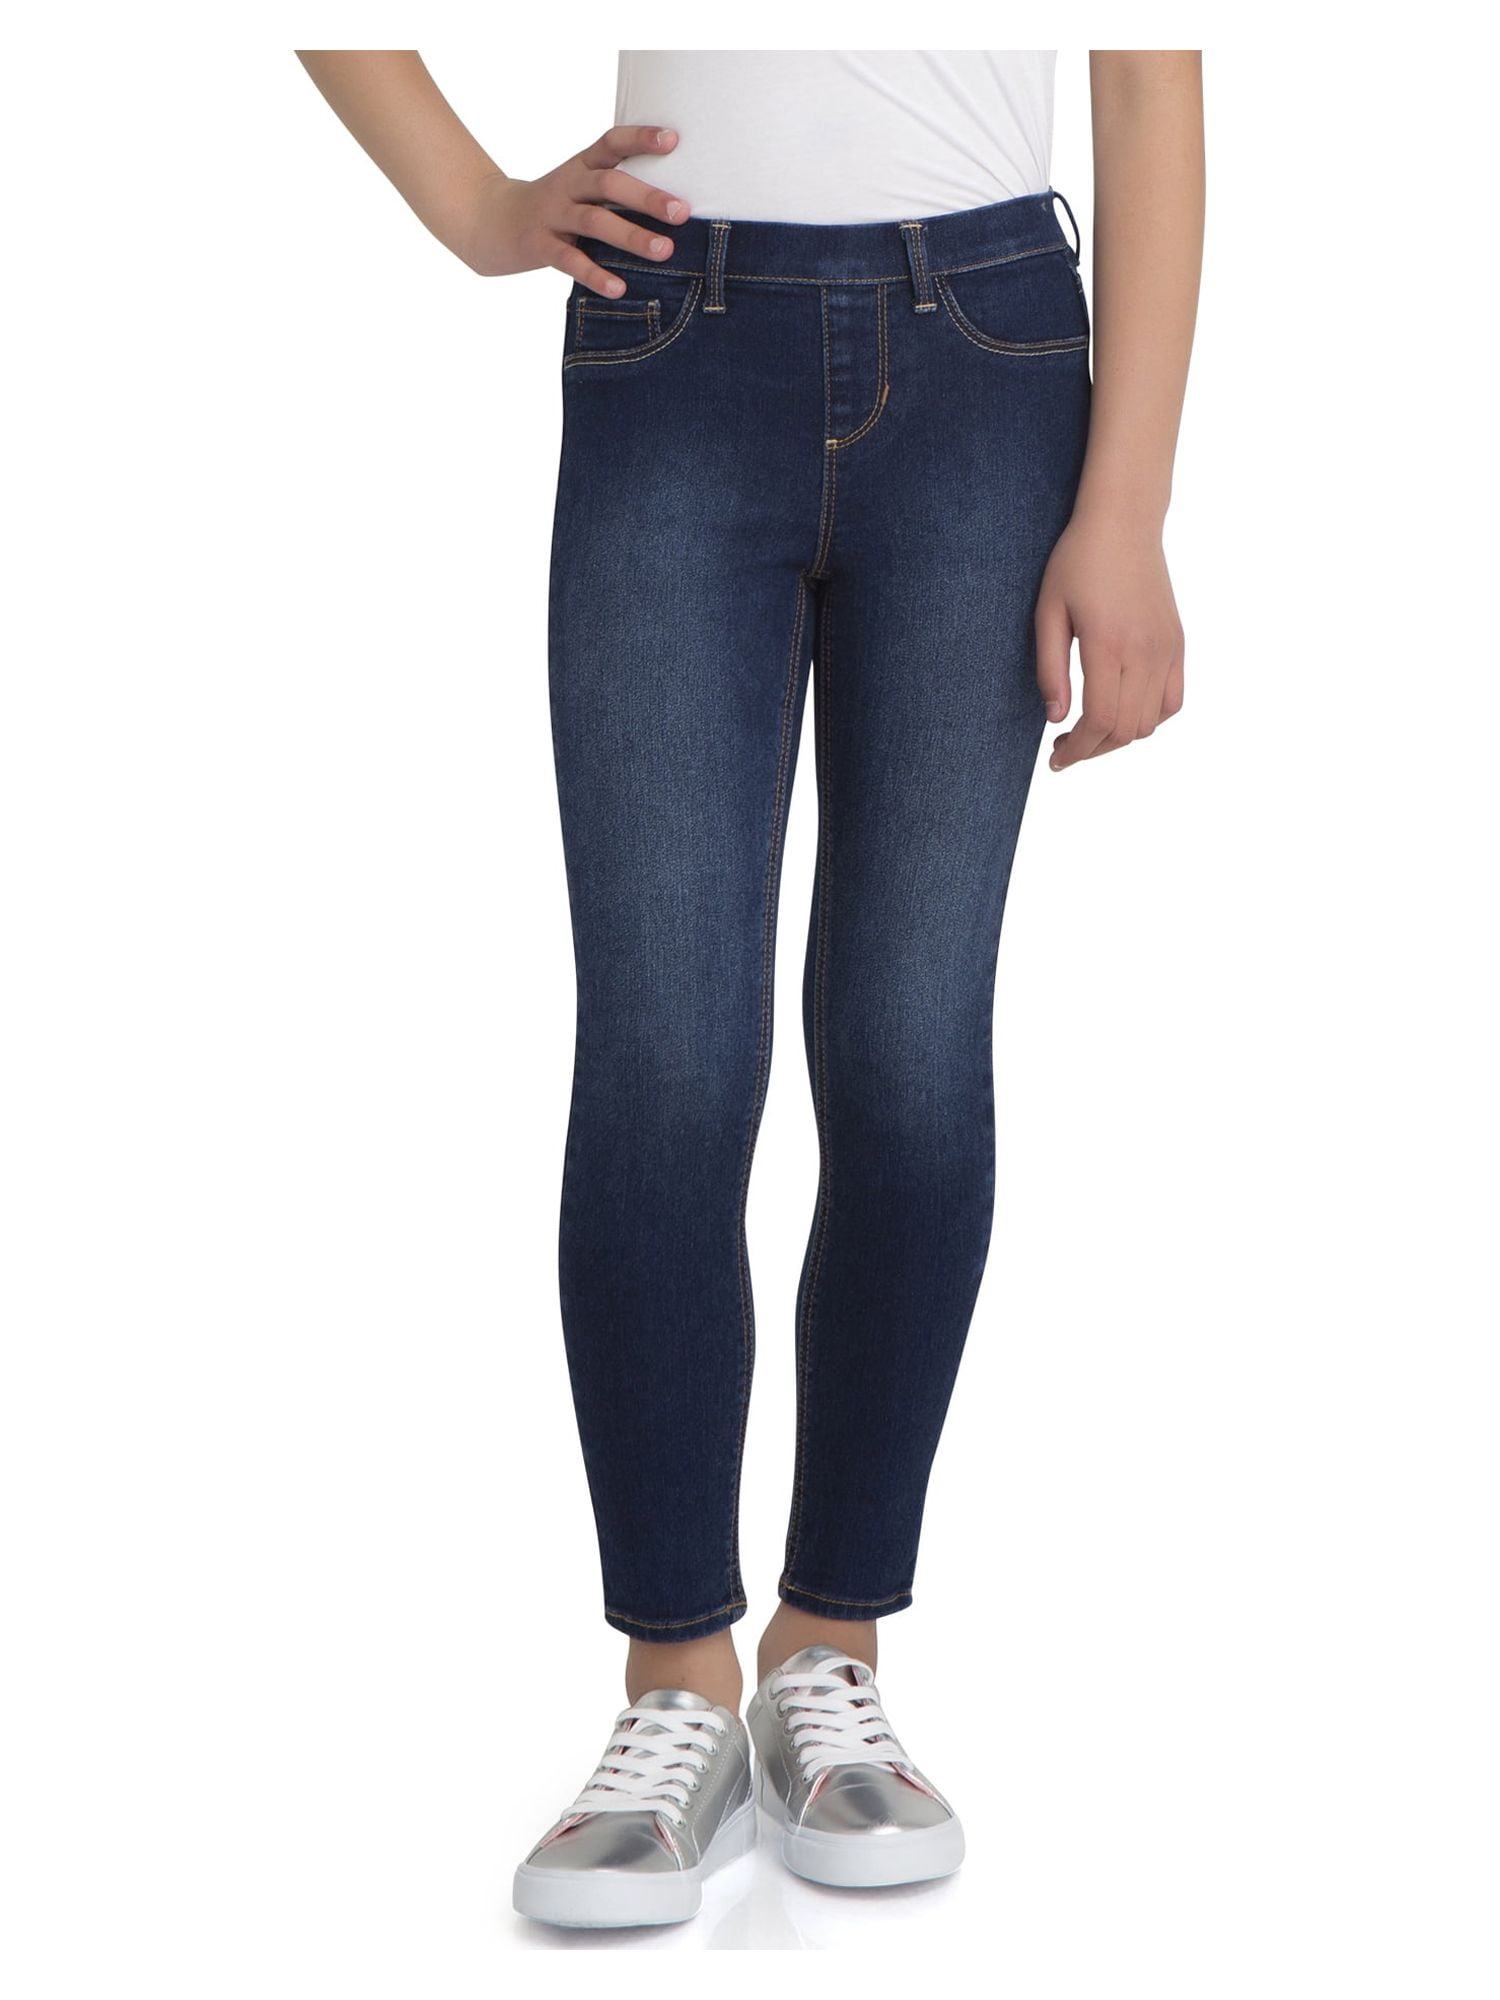 Wonder Nation Girls Essential Pull-On Jegging Jeans, Sizes 4-18 & Plus -  Walmart.com